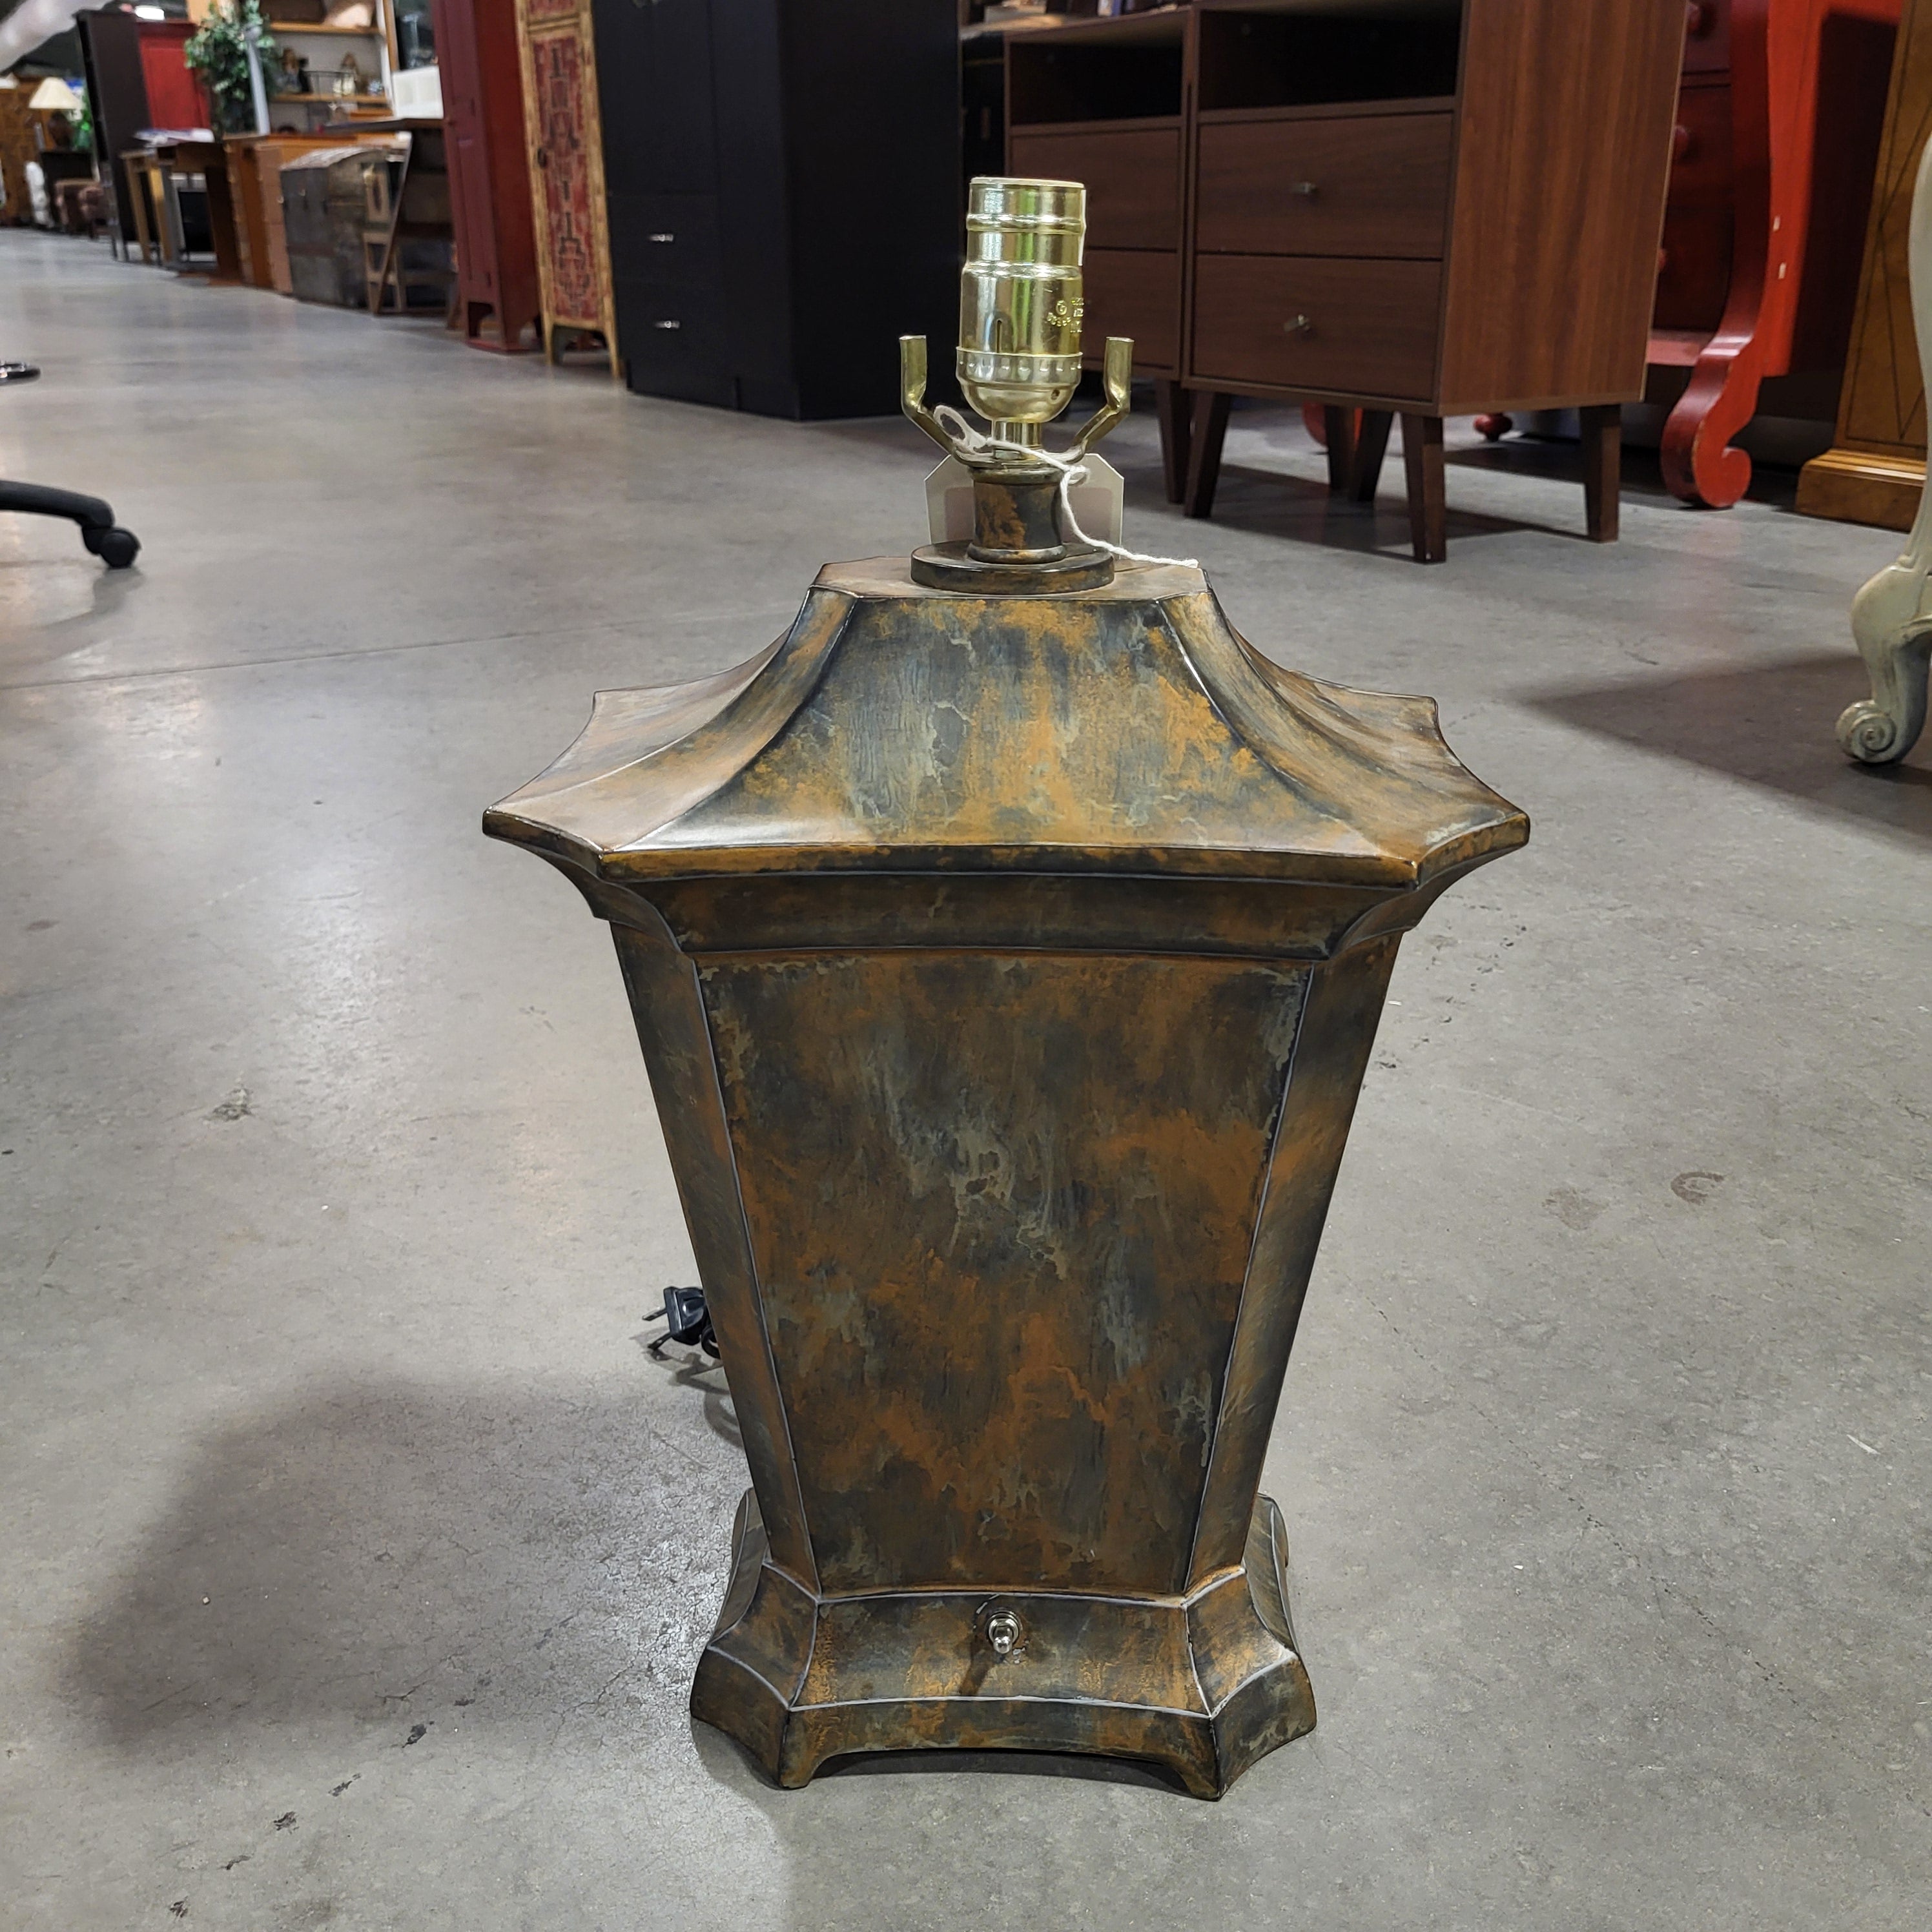 Oriental Gilded Metal Table Lamp 11"x 9"x 19"